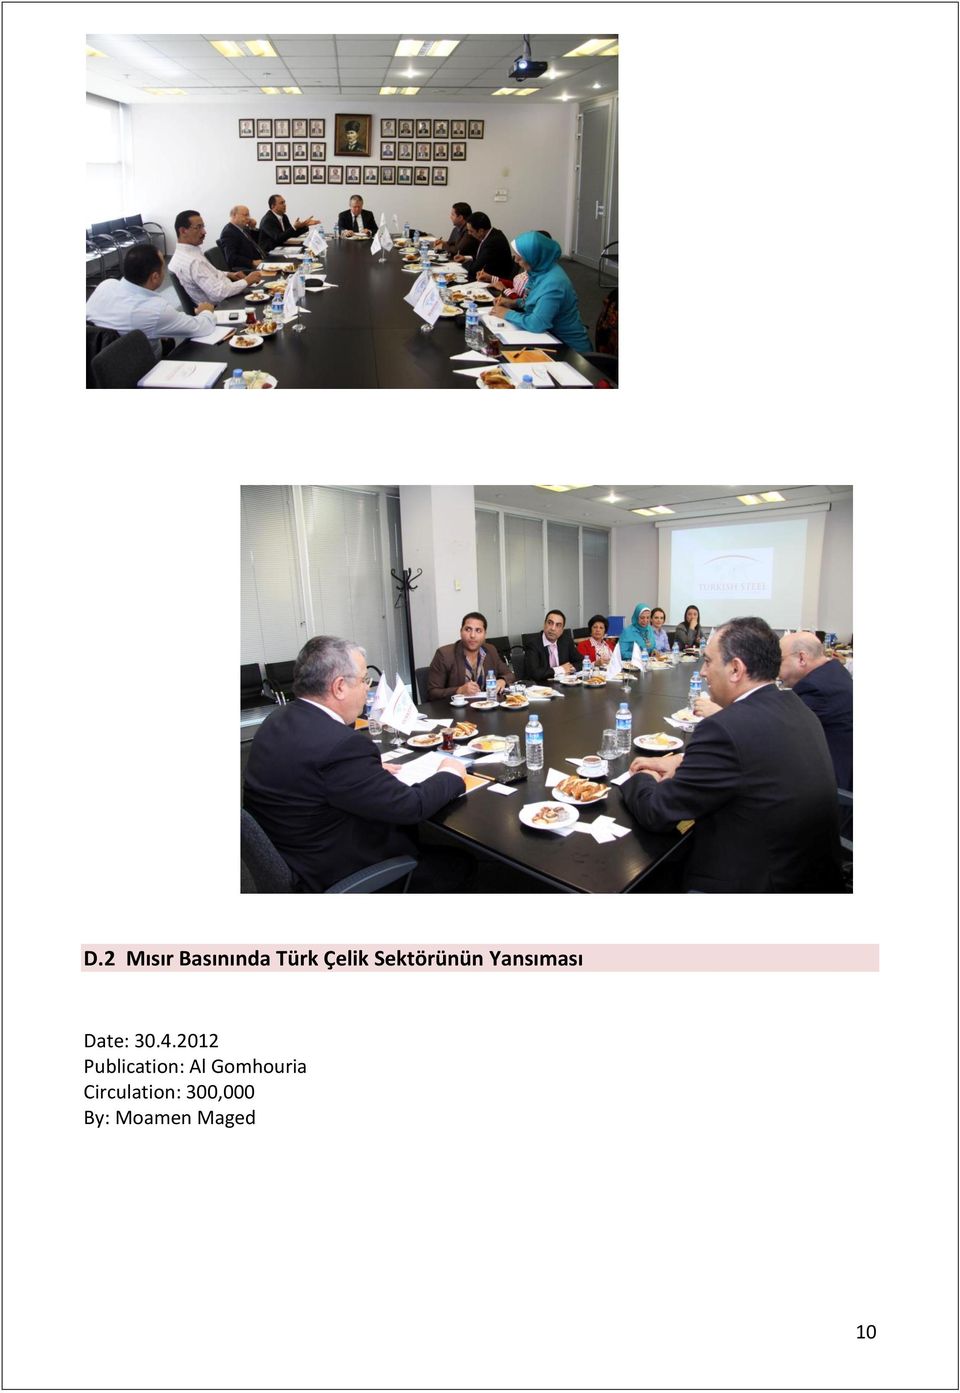 2012 Publication: Al Gomhouria